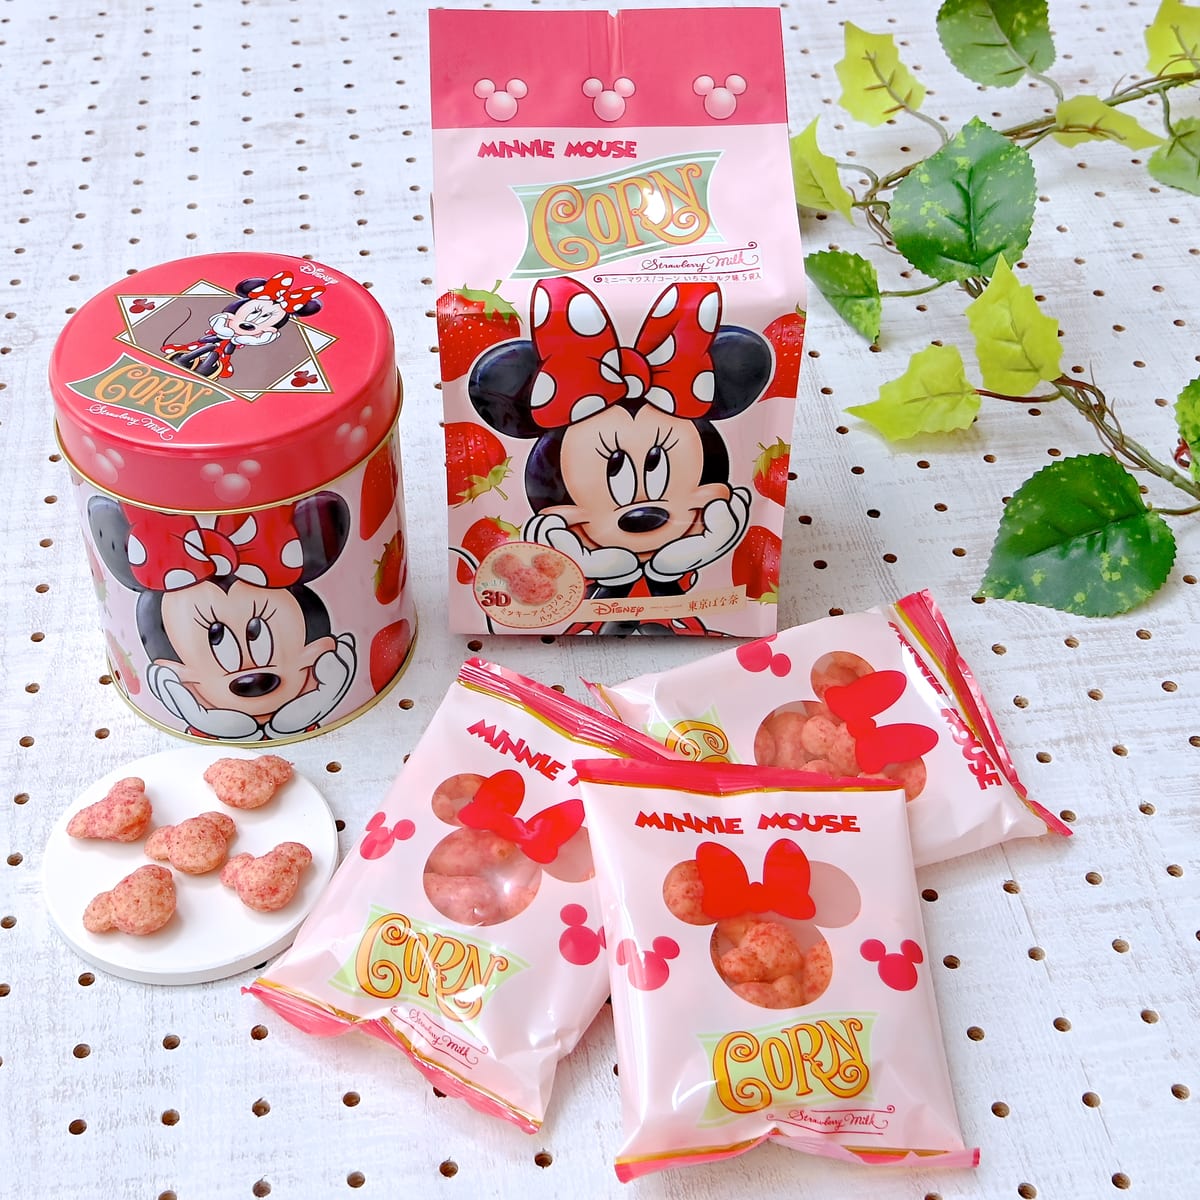 Disney SWEETS COLLECTION by 東京ばな奈『ミニーマウス/コーン いちごミルク味』お土産